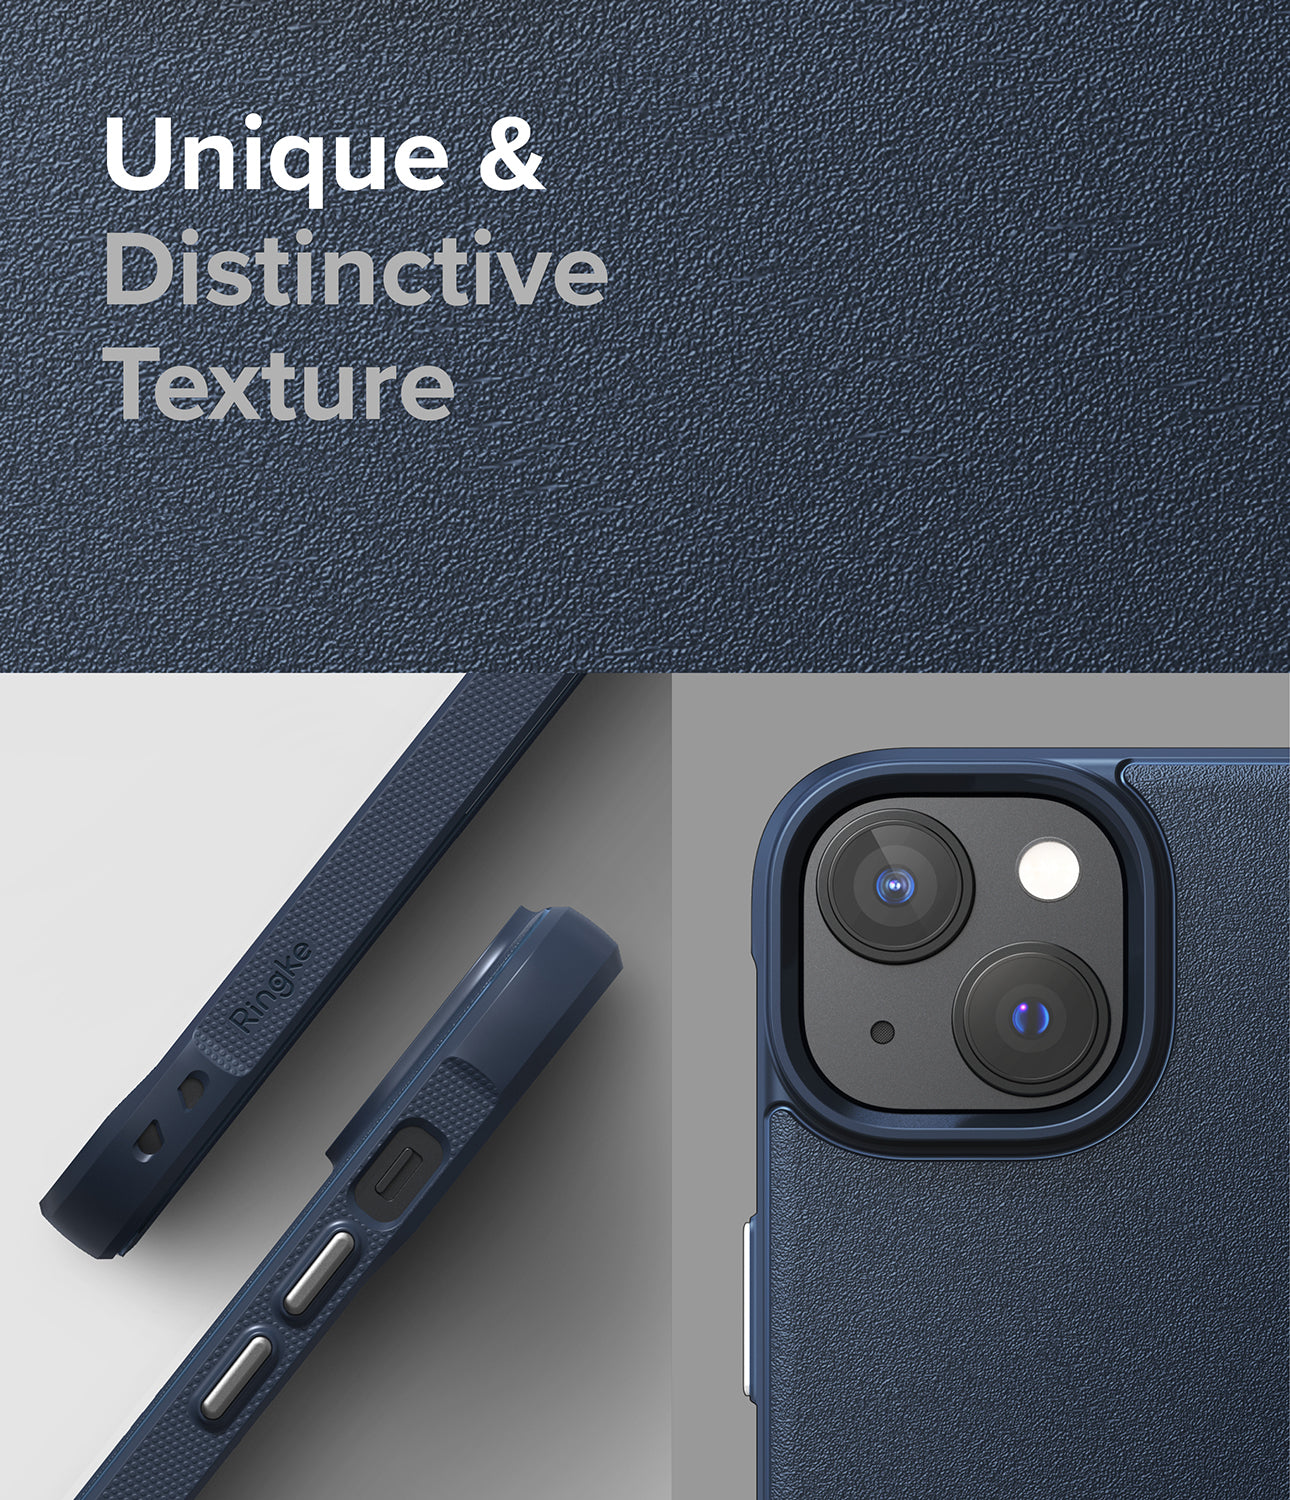 iPhone 14 Case | Onyx - Navy - Unique and Distinctive Texture.